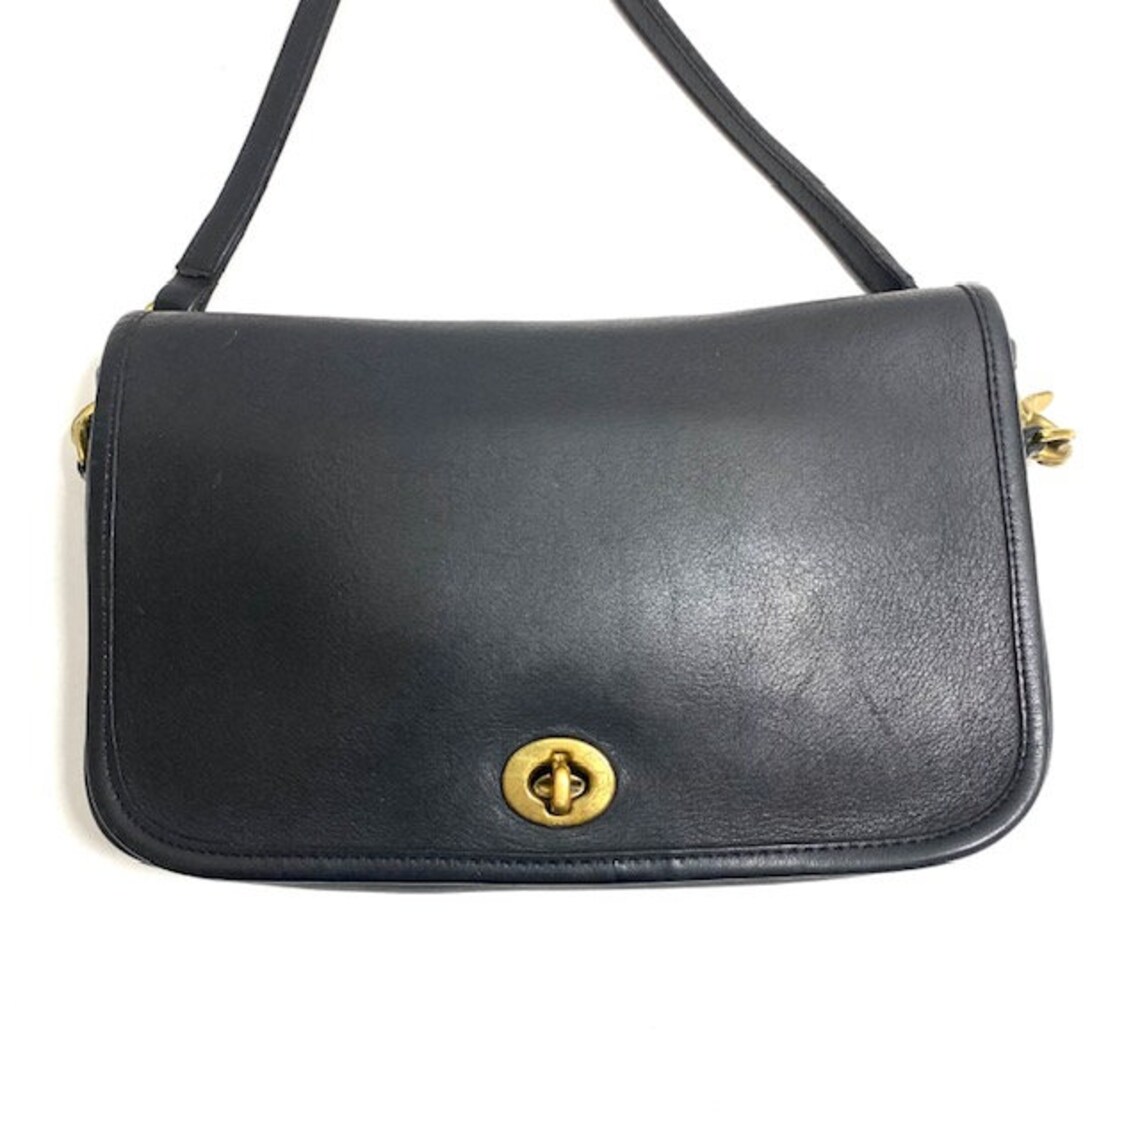 COACH Penny Pocket Black Leather Crossbody Bag | Etsy